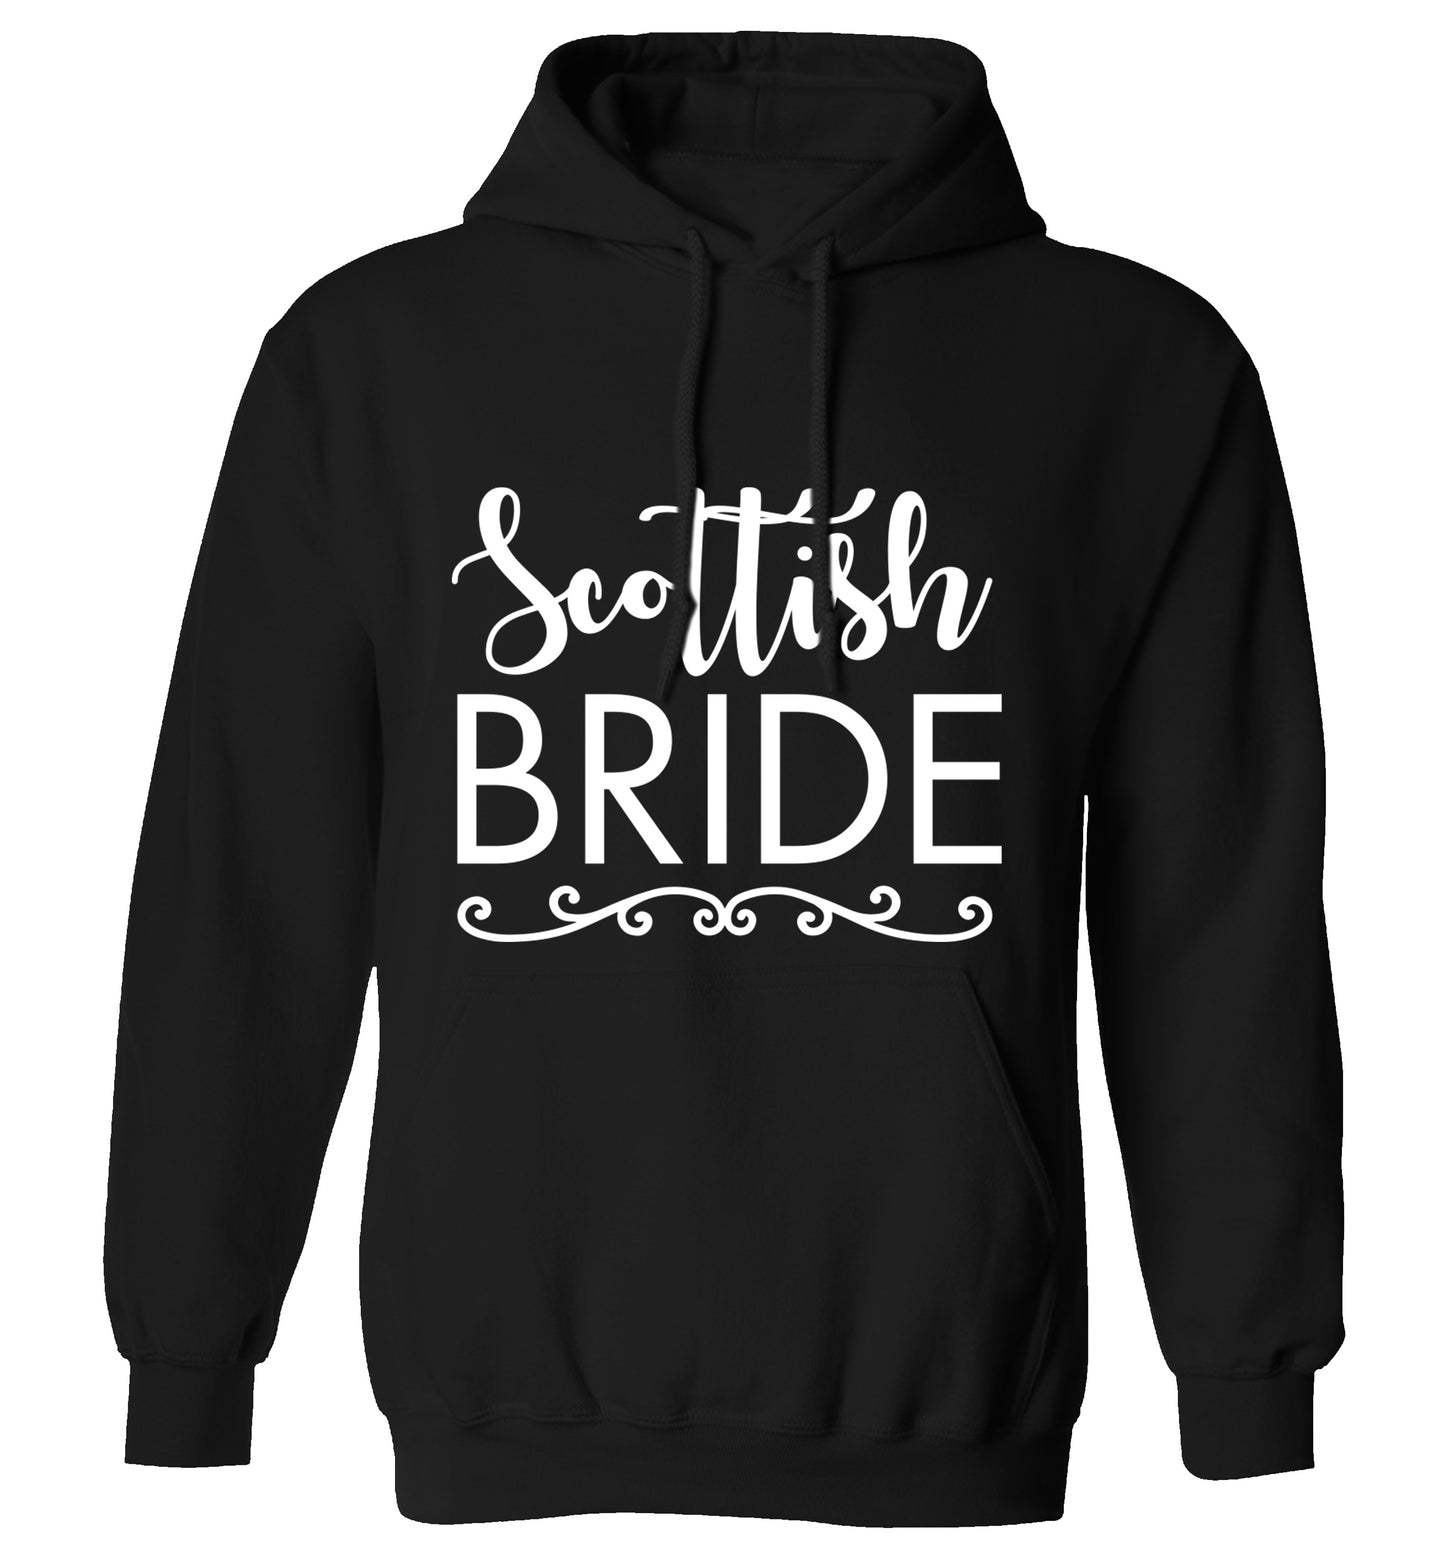 Scottish Bride adults unisex black hoodie 2XL